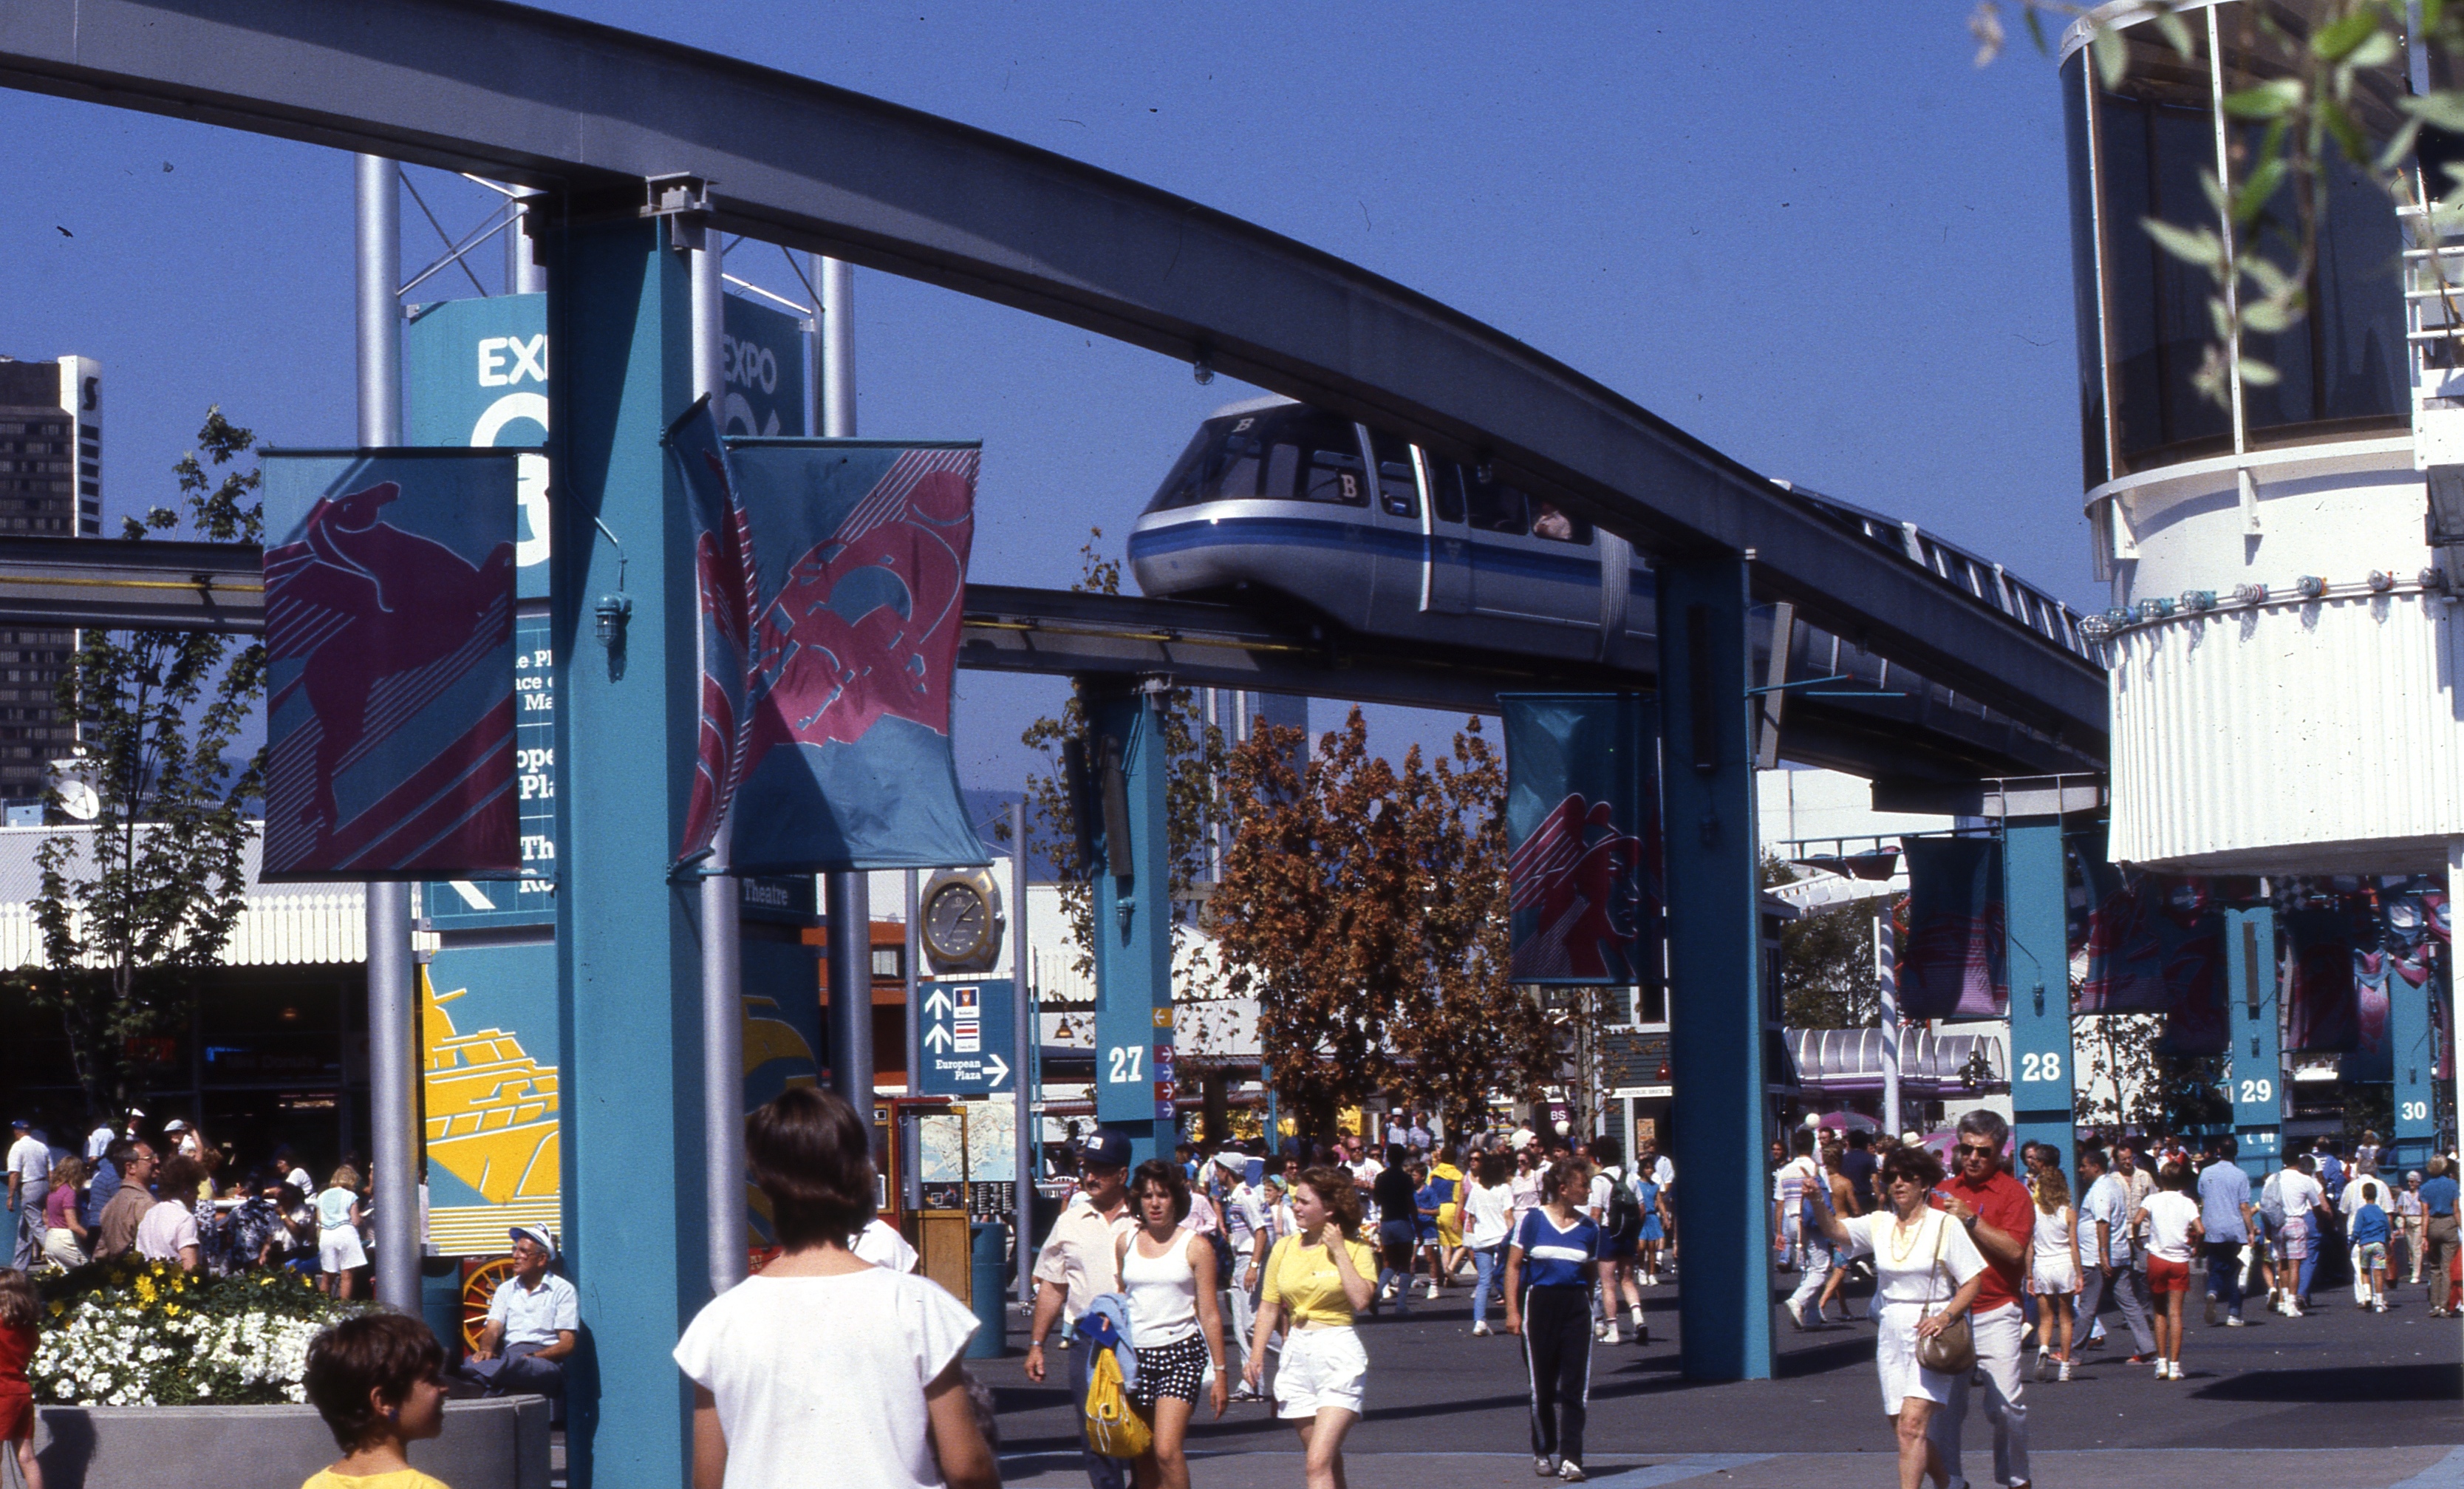 Expo_86_-_monorail